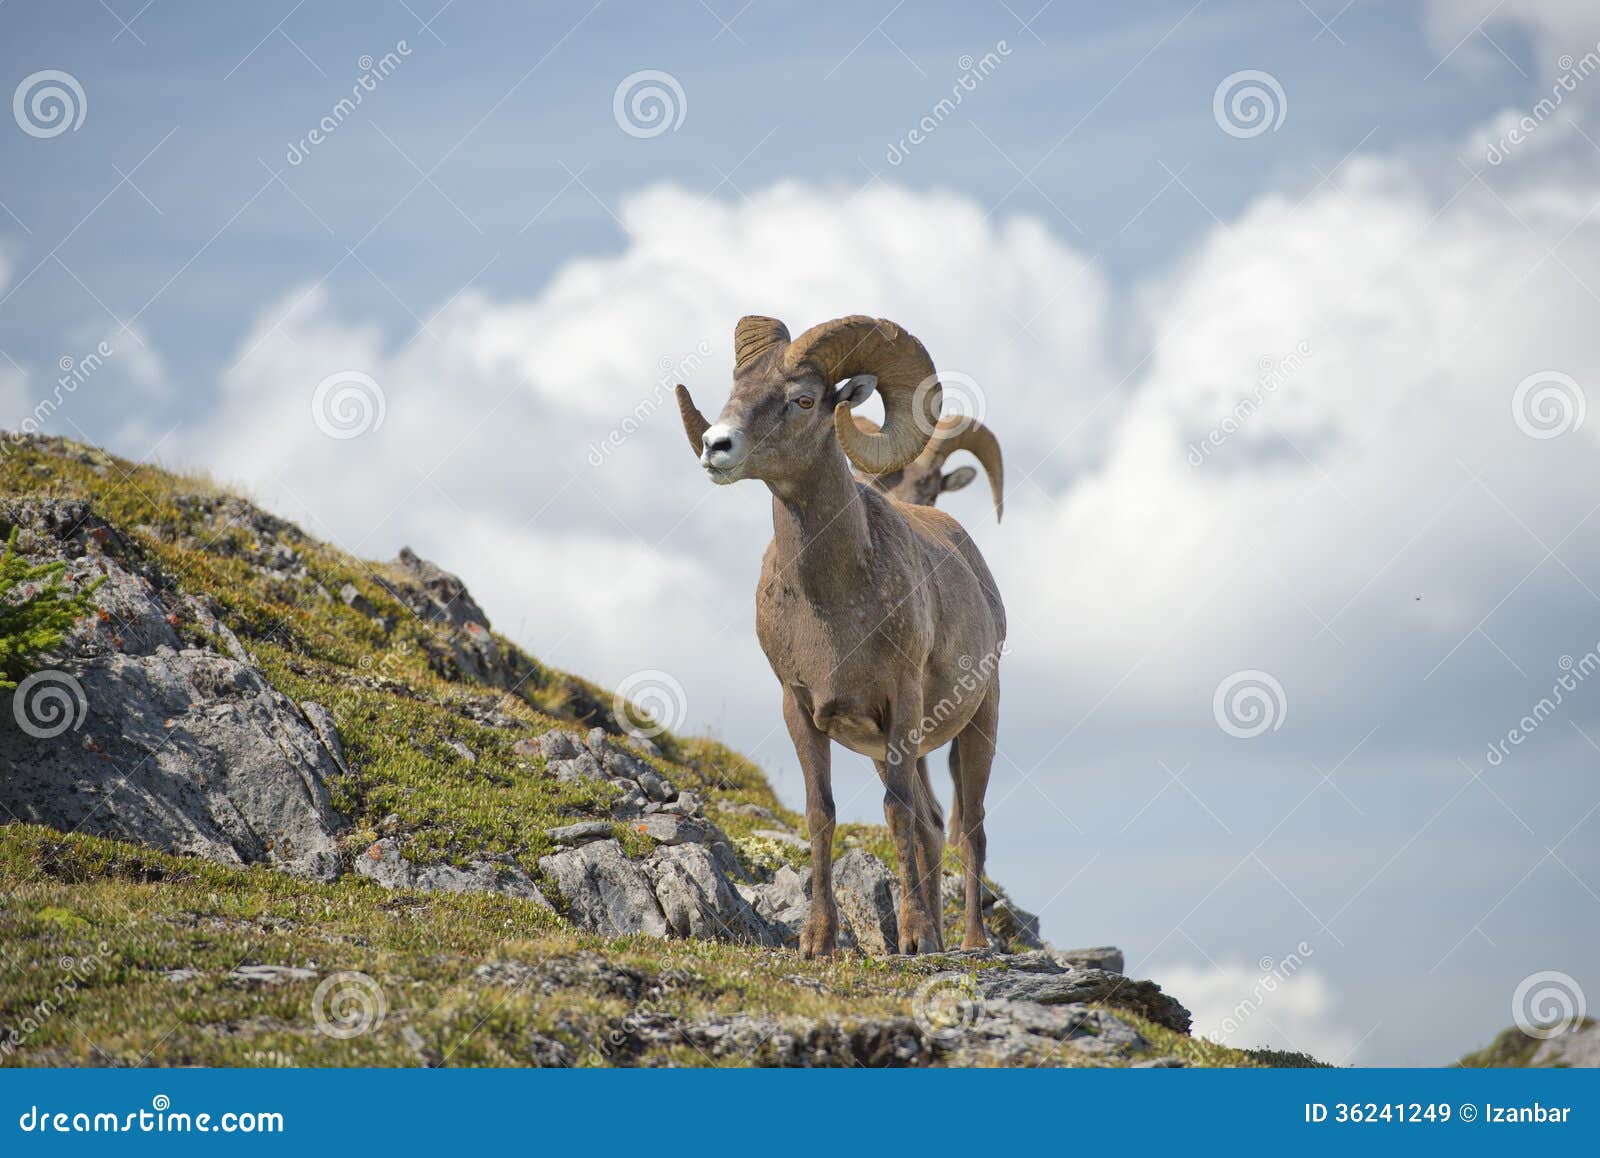 big horn sheep portrait